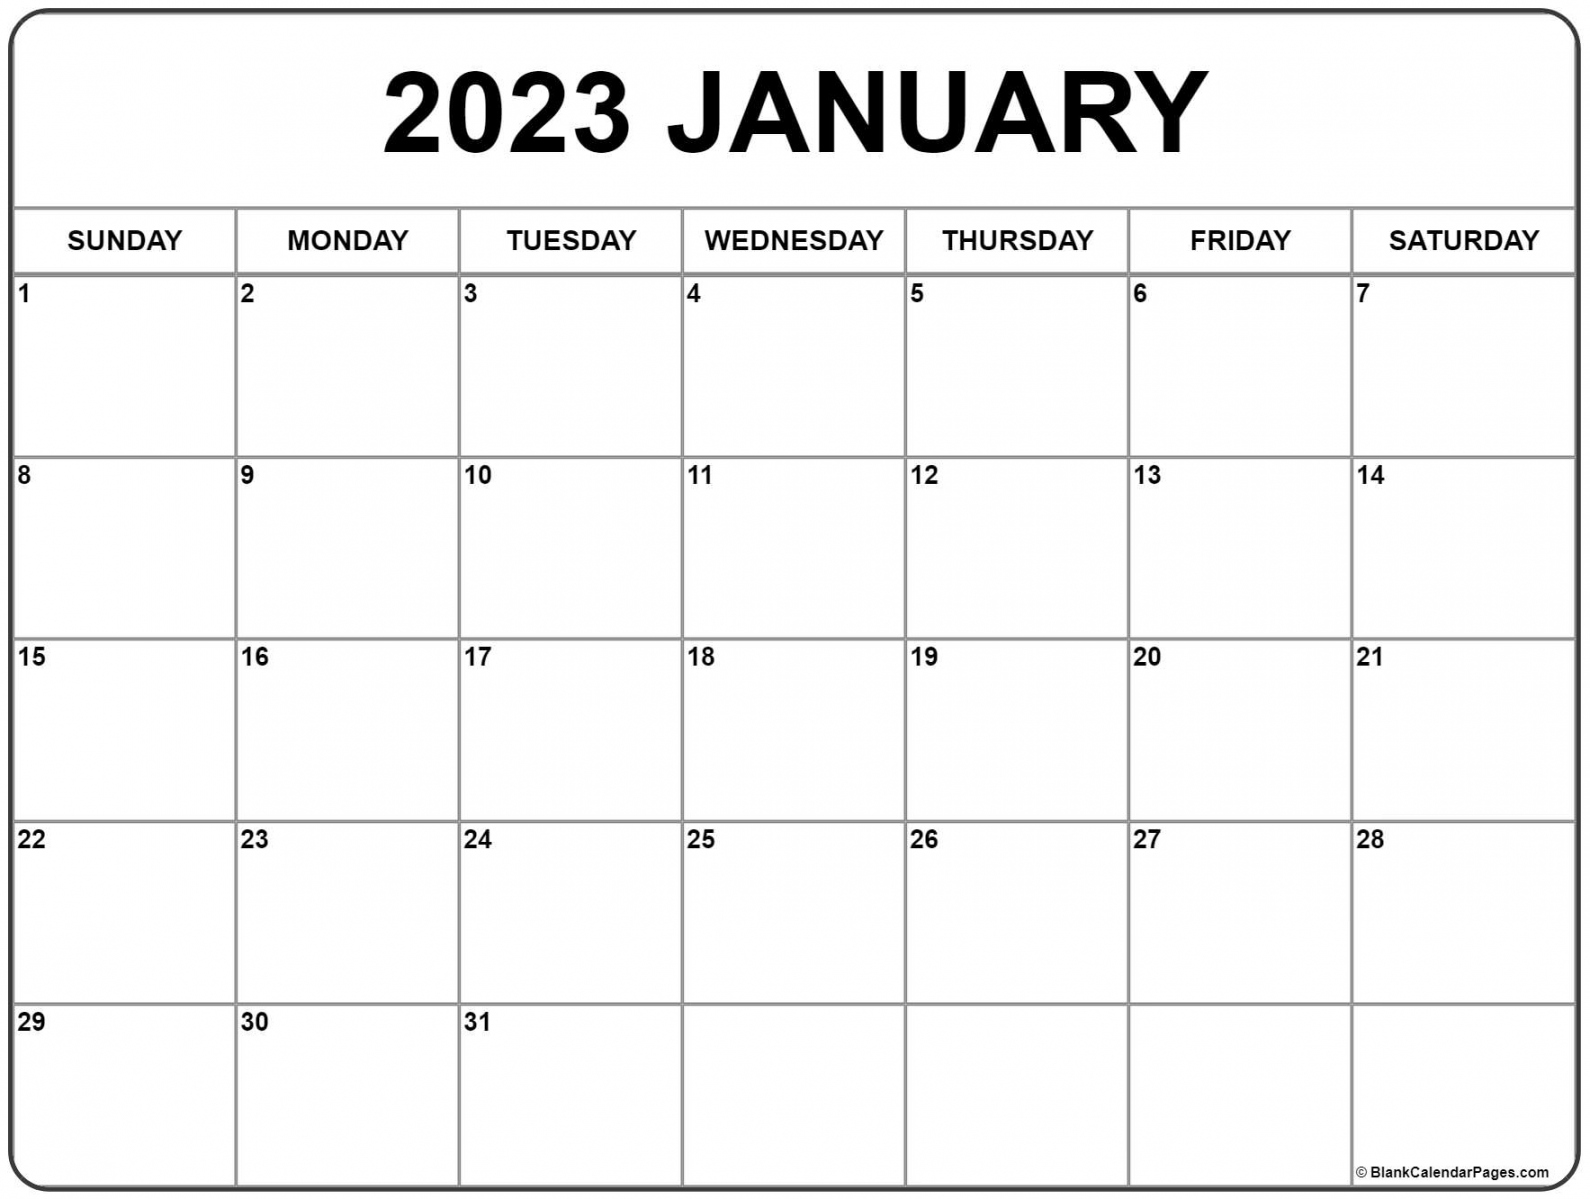 Free Printable 2023 Monthly Calendar - Printable - January  calendar  free printable calendar